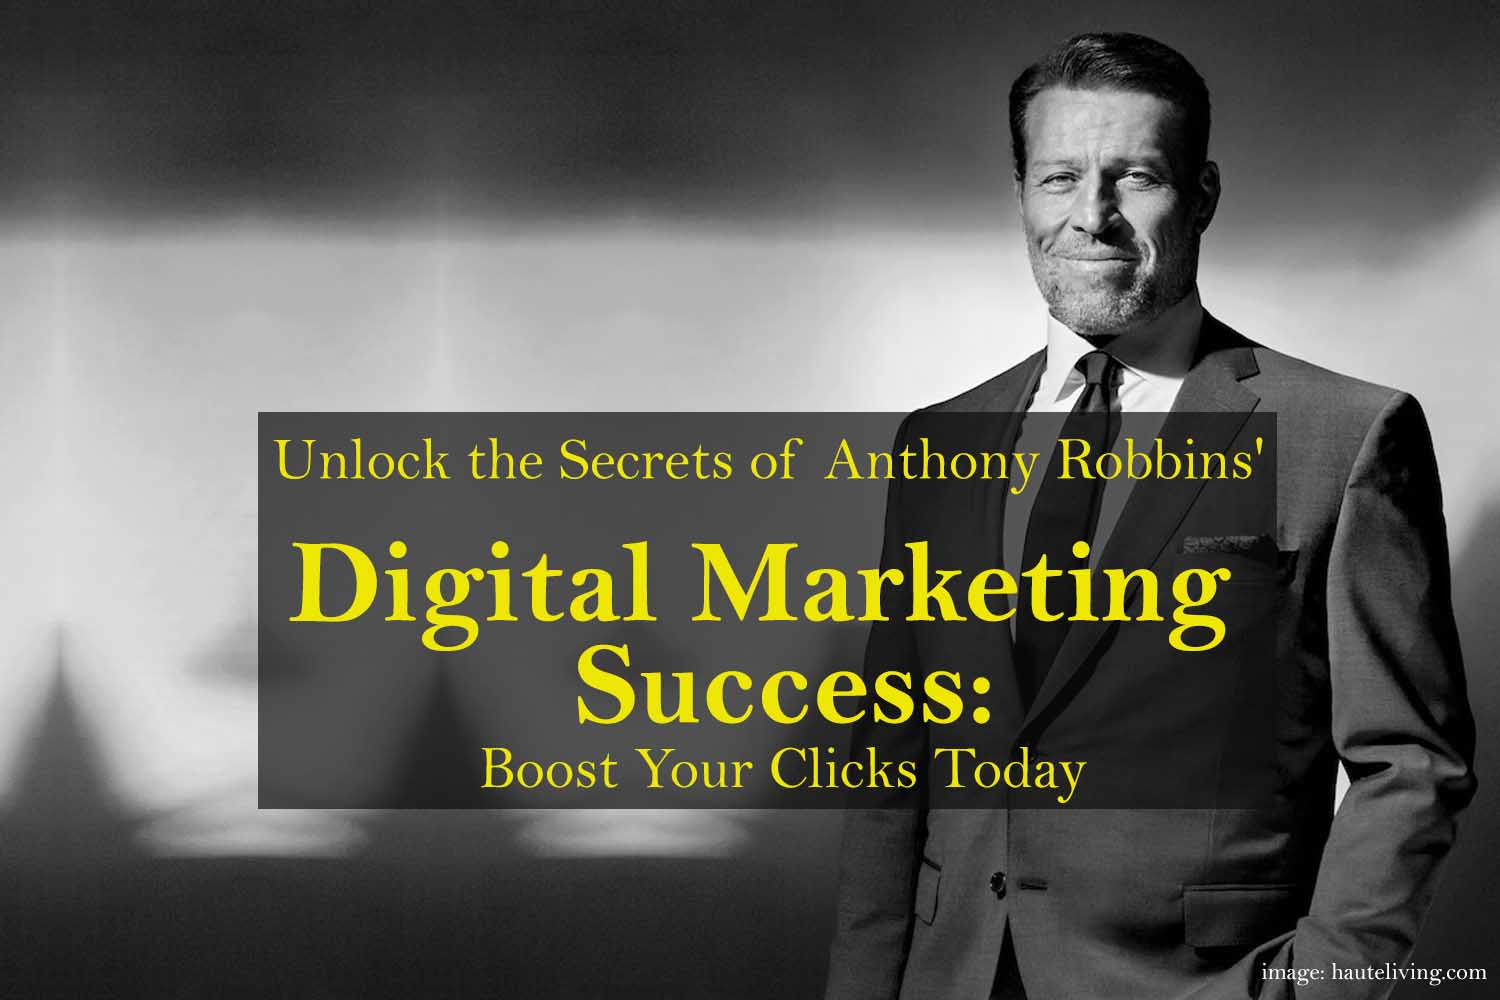 Unlock the Secrets of Anthony Robbins' Digital Marketing Success